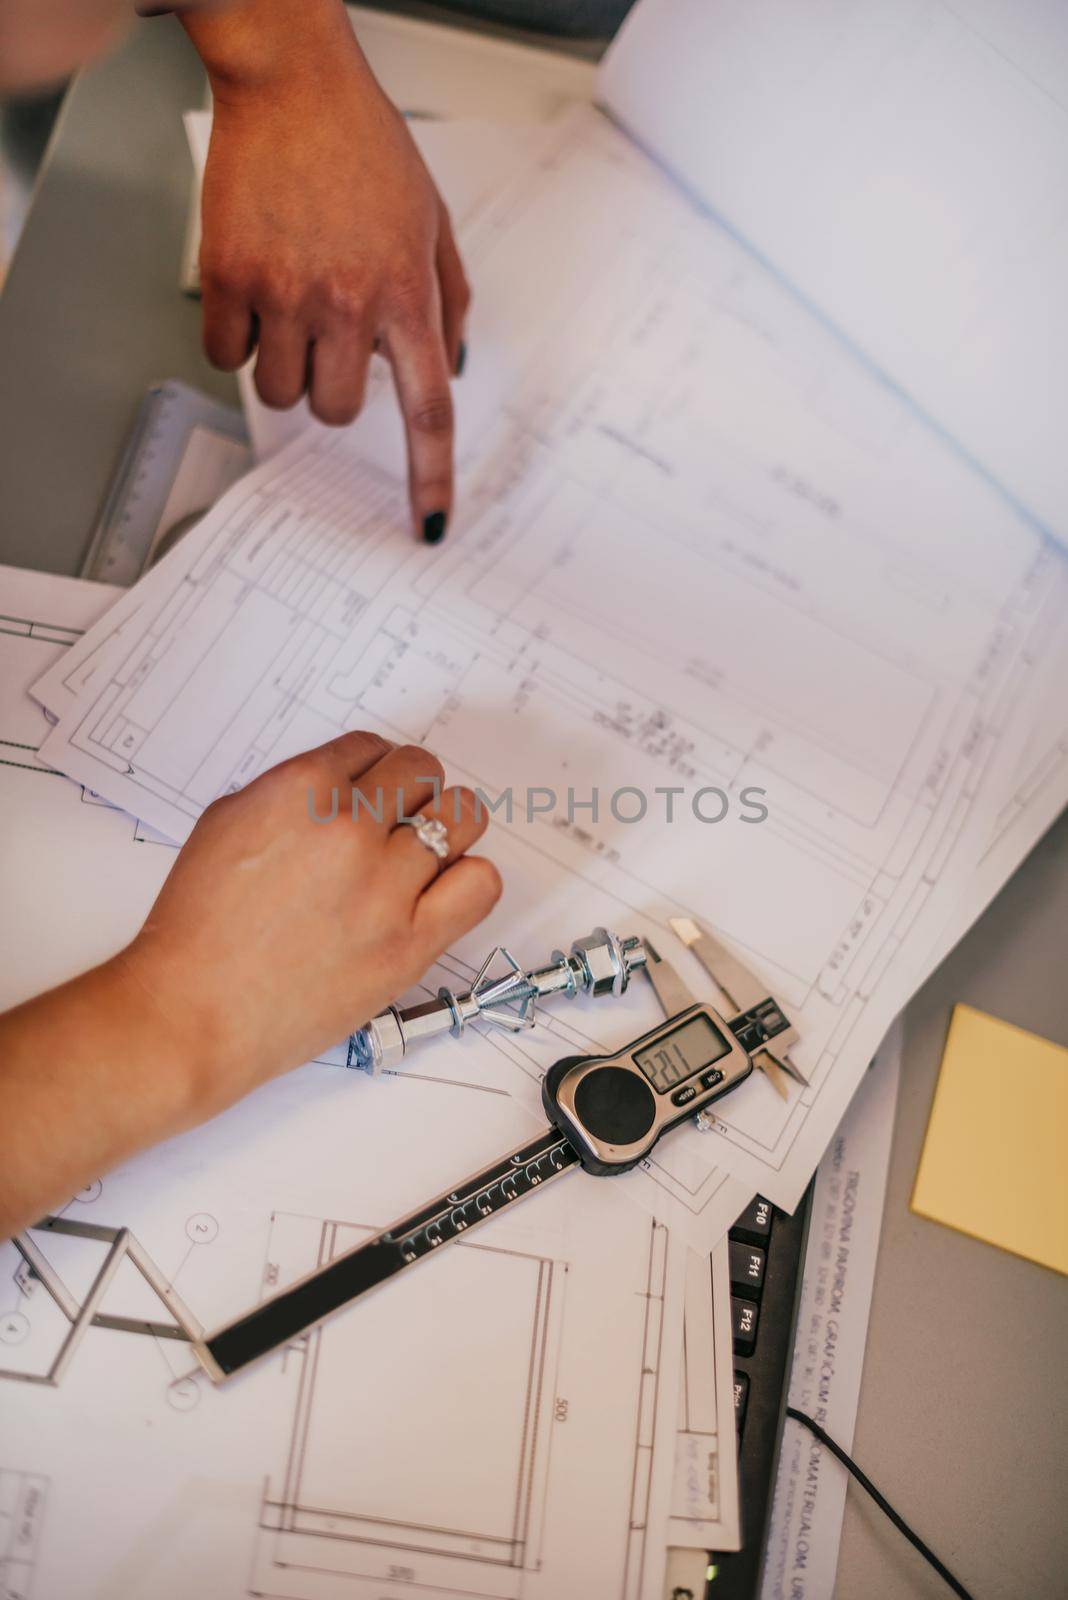 Engineer technician designing drawings mechanical parts engineering Enginemanufacturing factory Industry Industrial work project blueprints measuring bearings caliper tools by dotshock